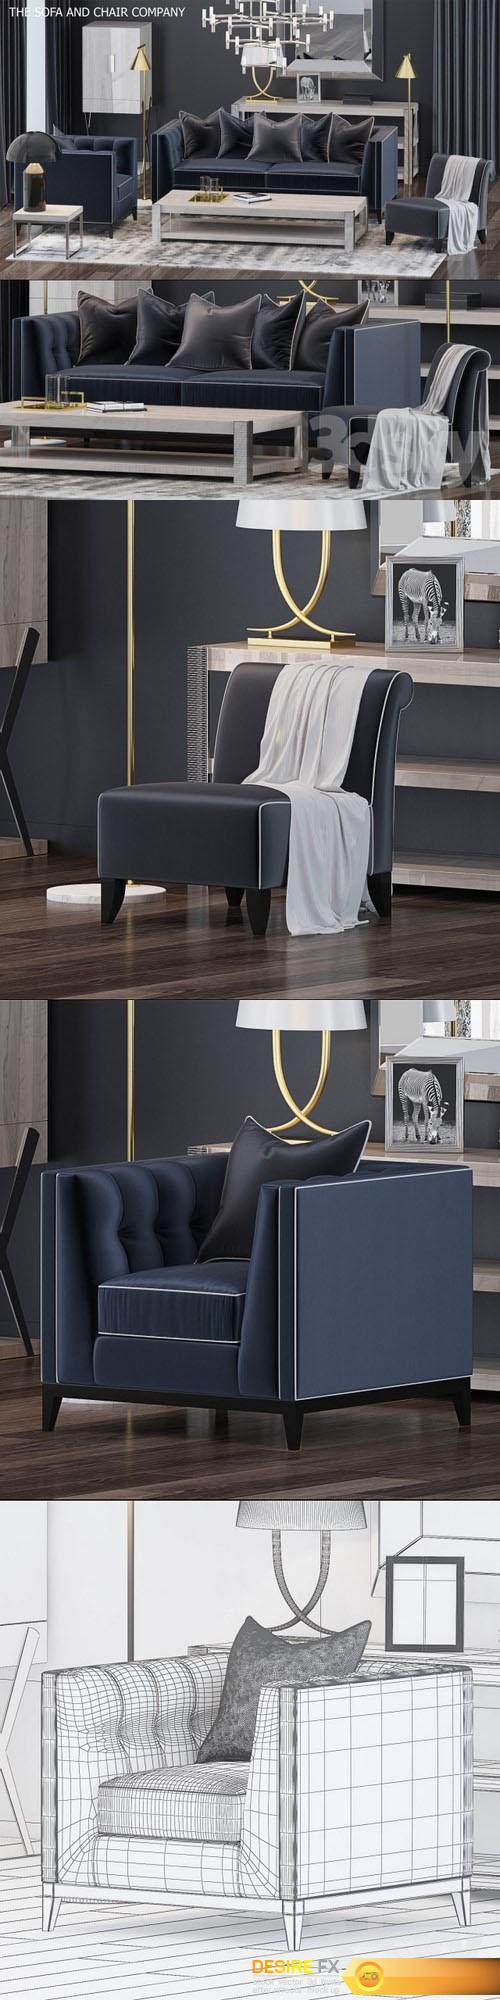 The Sofa & Chair Company Set 6 3d Model